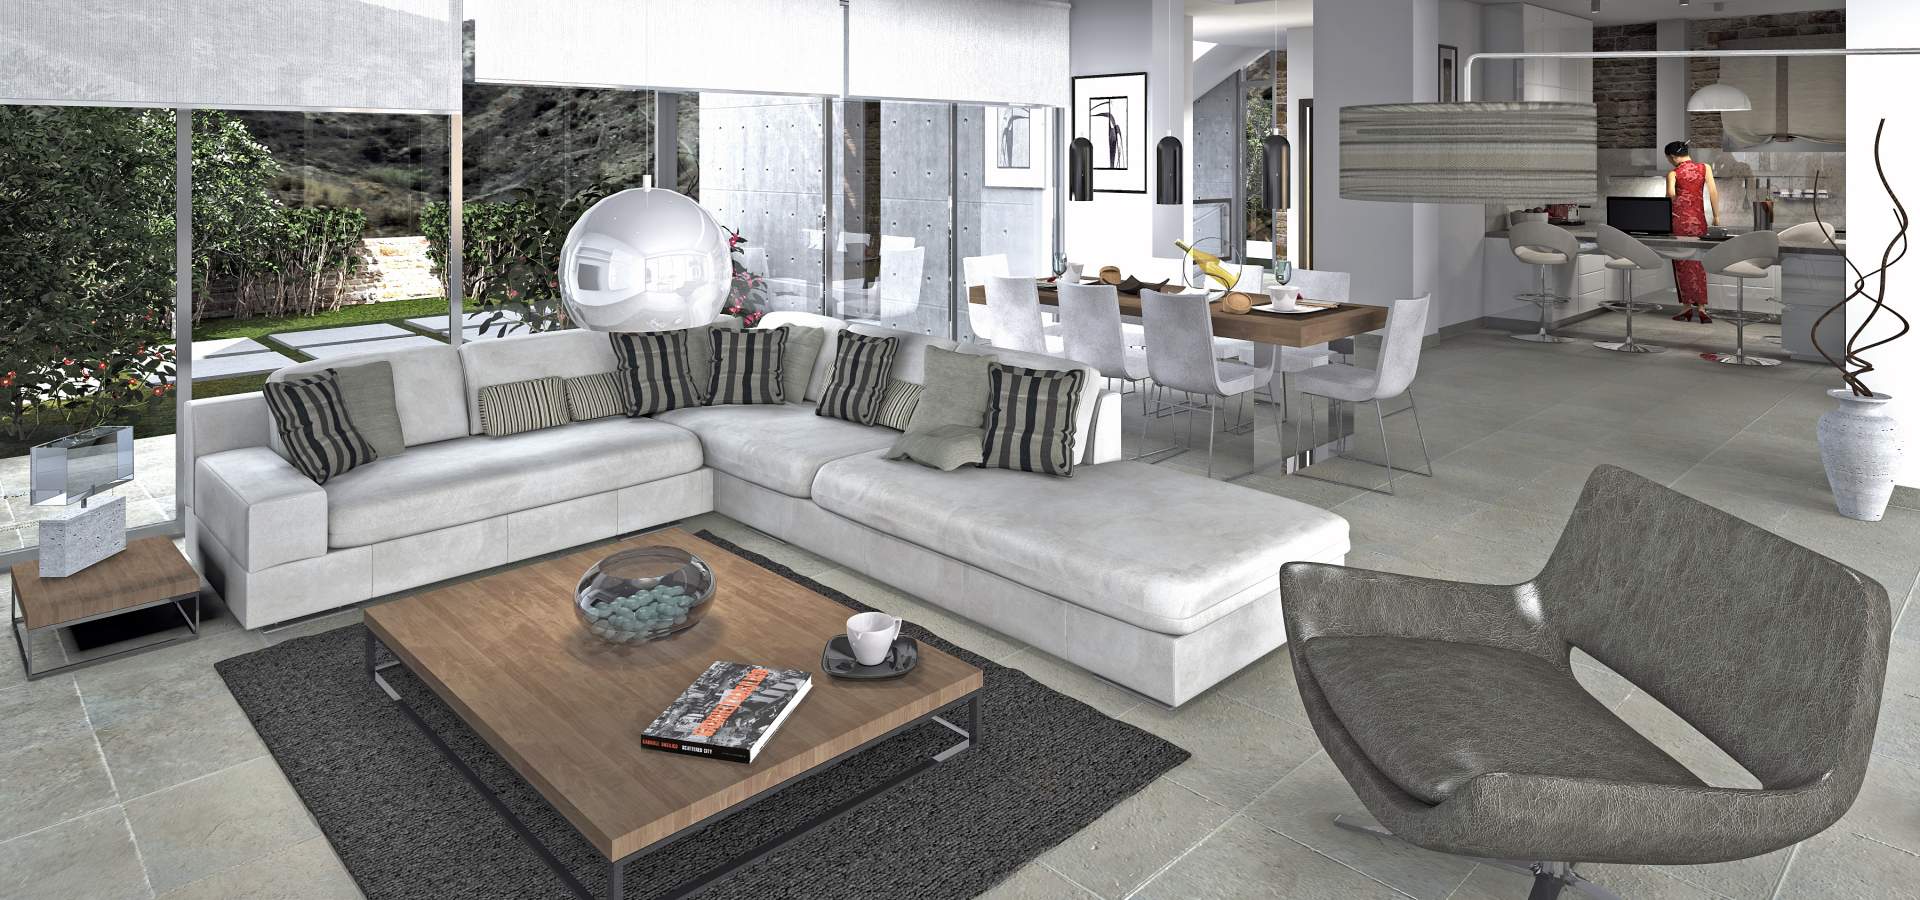 Konia Modern Luxury Residences Interior Design